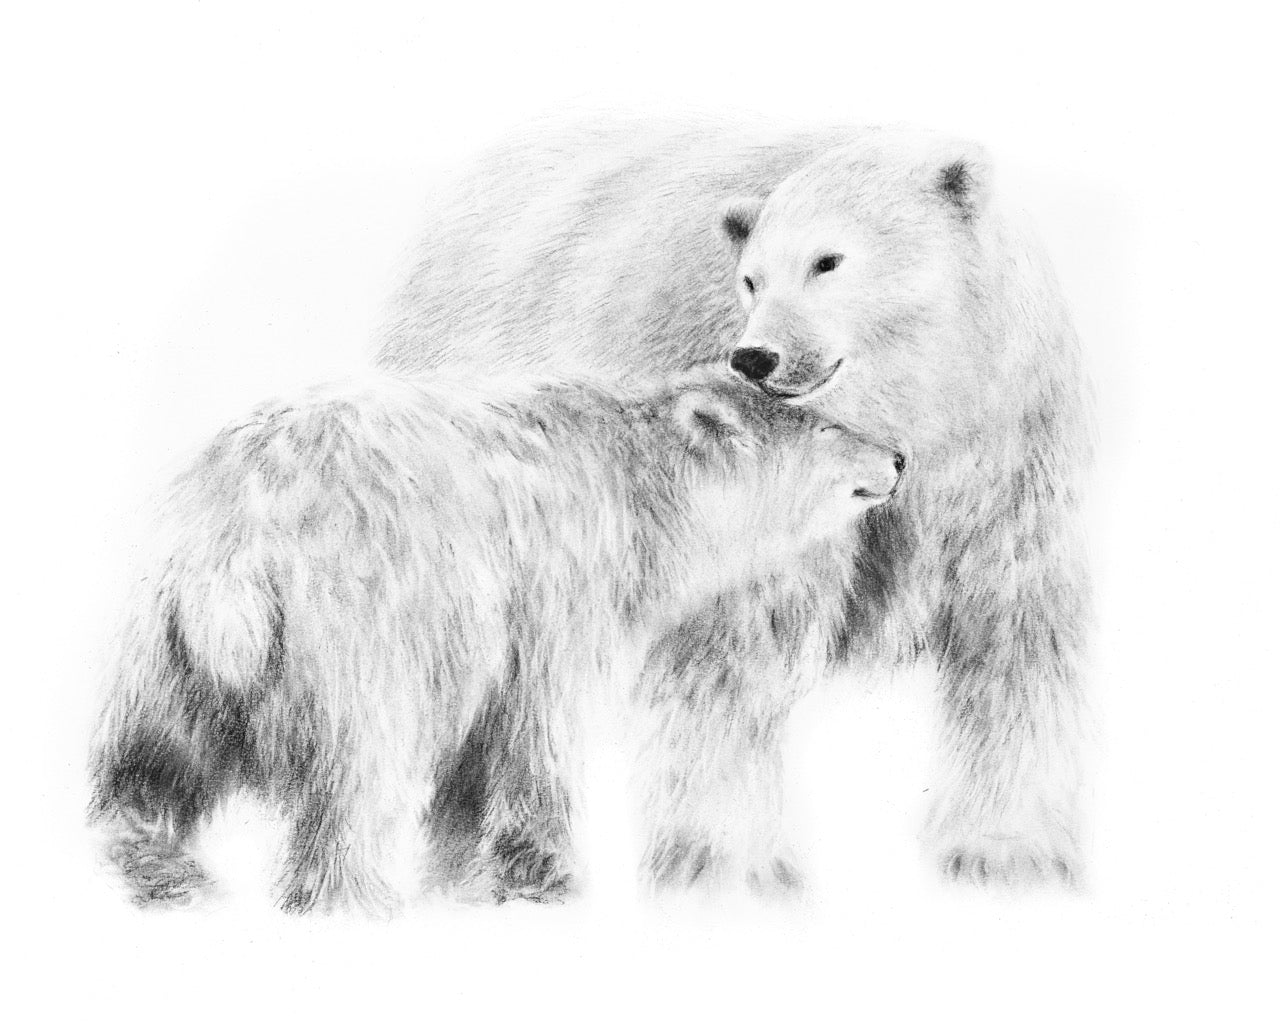 PRINT REPRODUCTION OF "POLAR BEAR" CHARCOAL